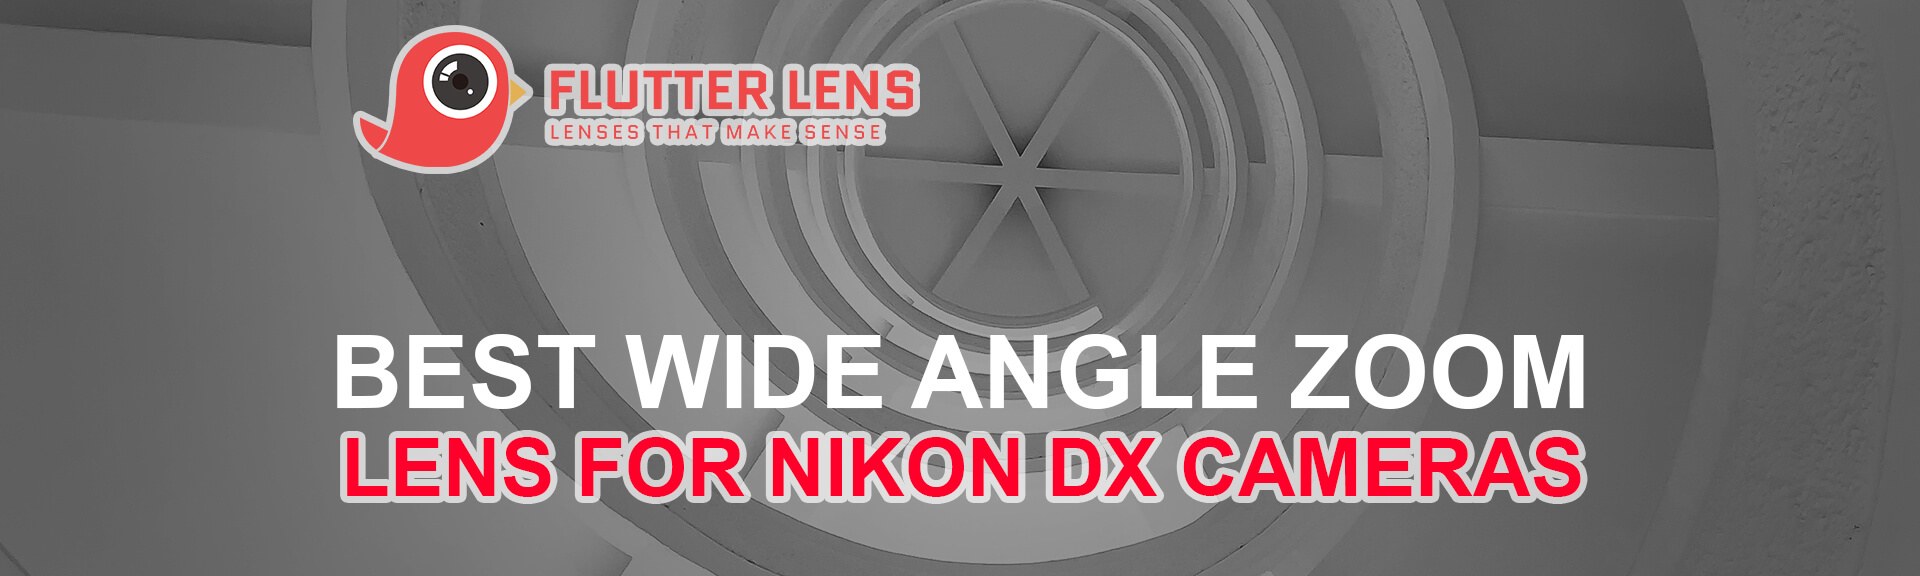 Best Wide Angle Zoom Lens for Nikon DX Cameras